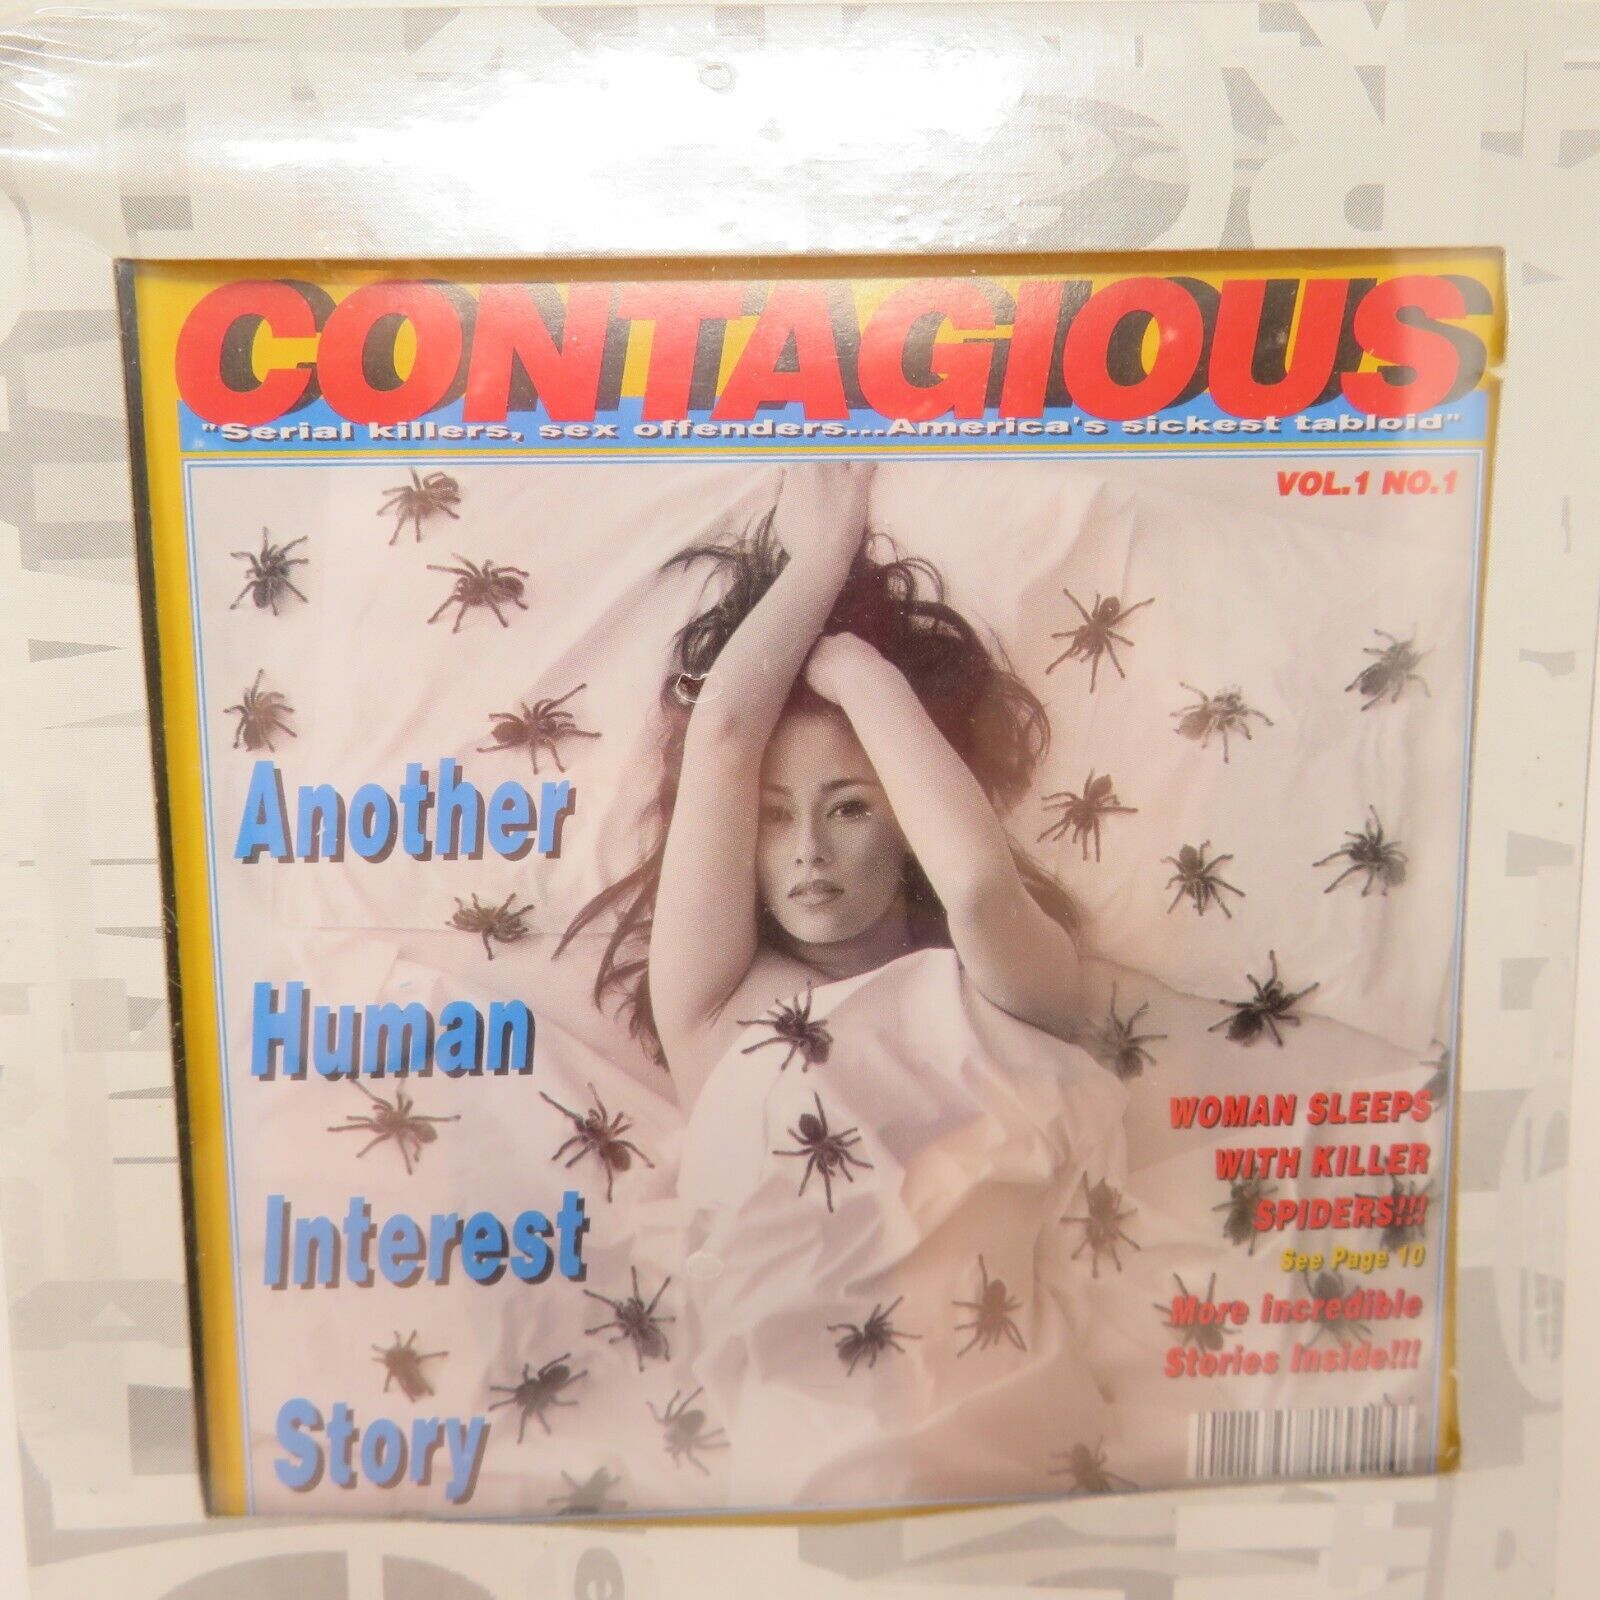 Vintage Contagious - Another Human Interest 1993 Longbox NOS Rock CD Mini-Album